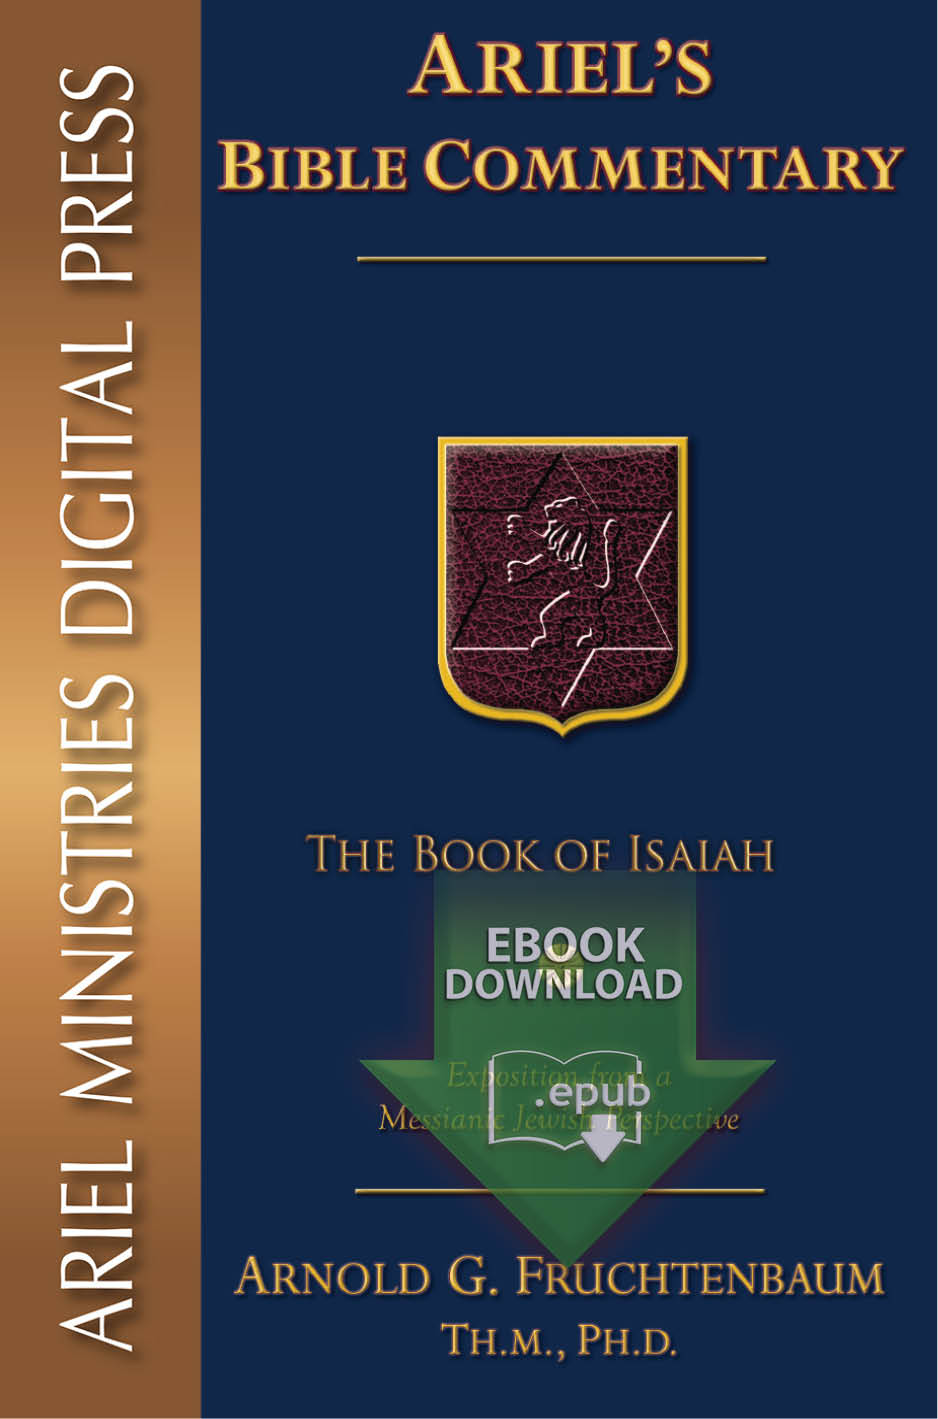 The Book of Isaiah epub